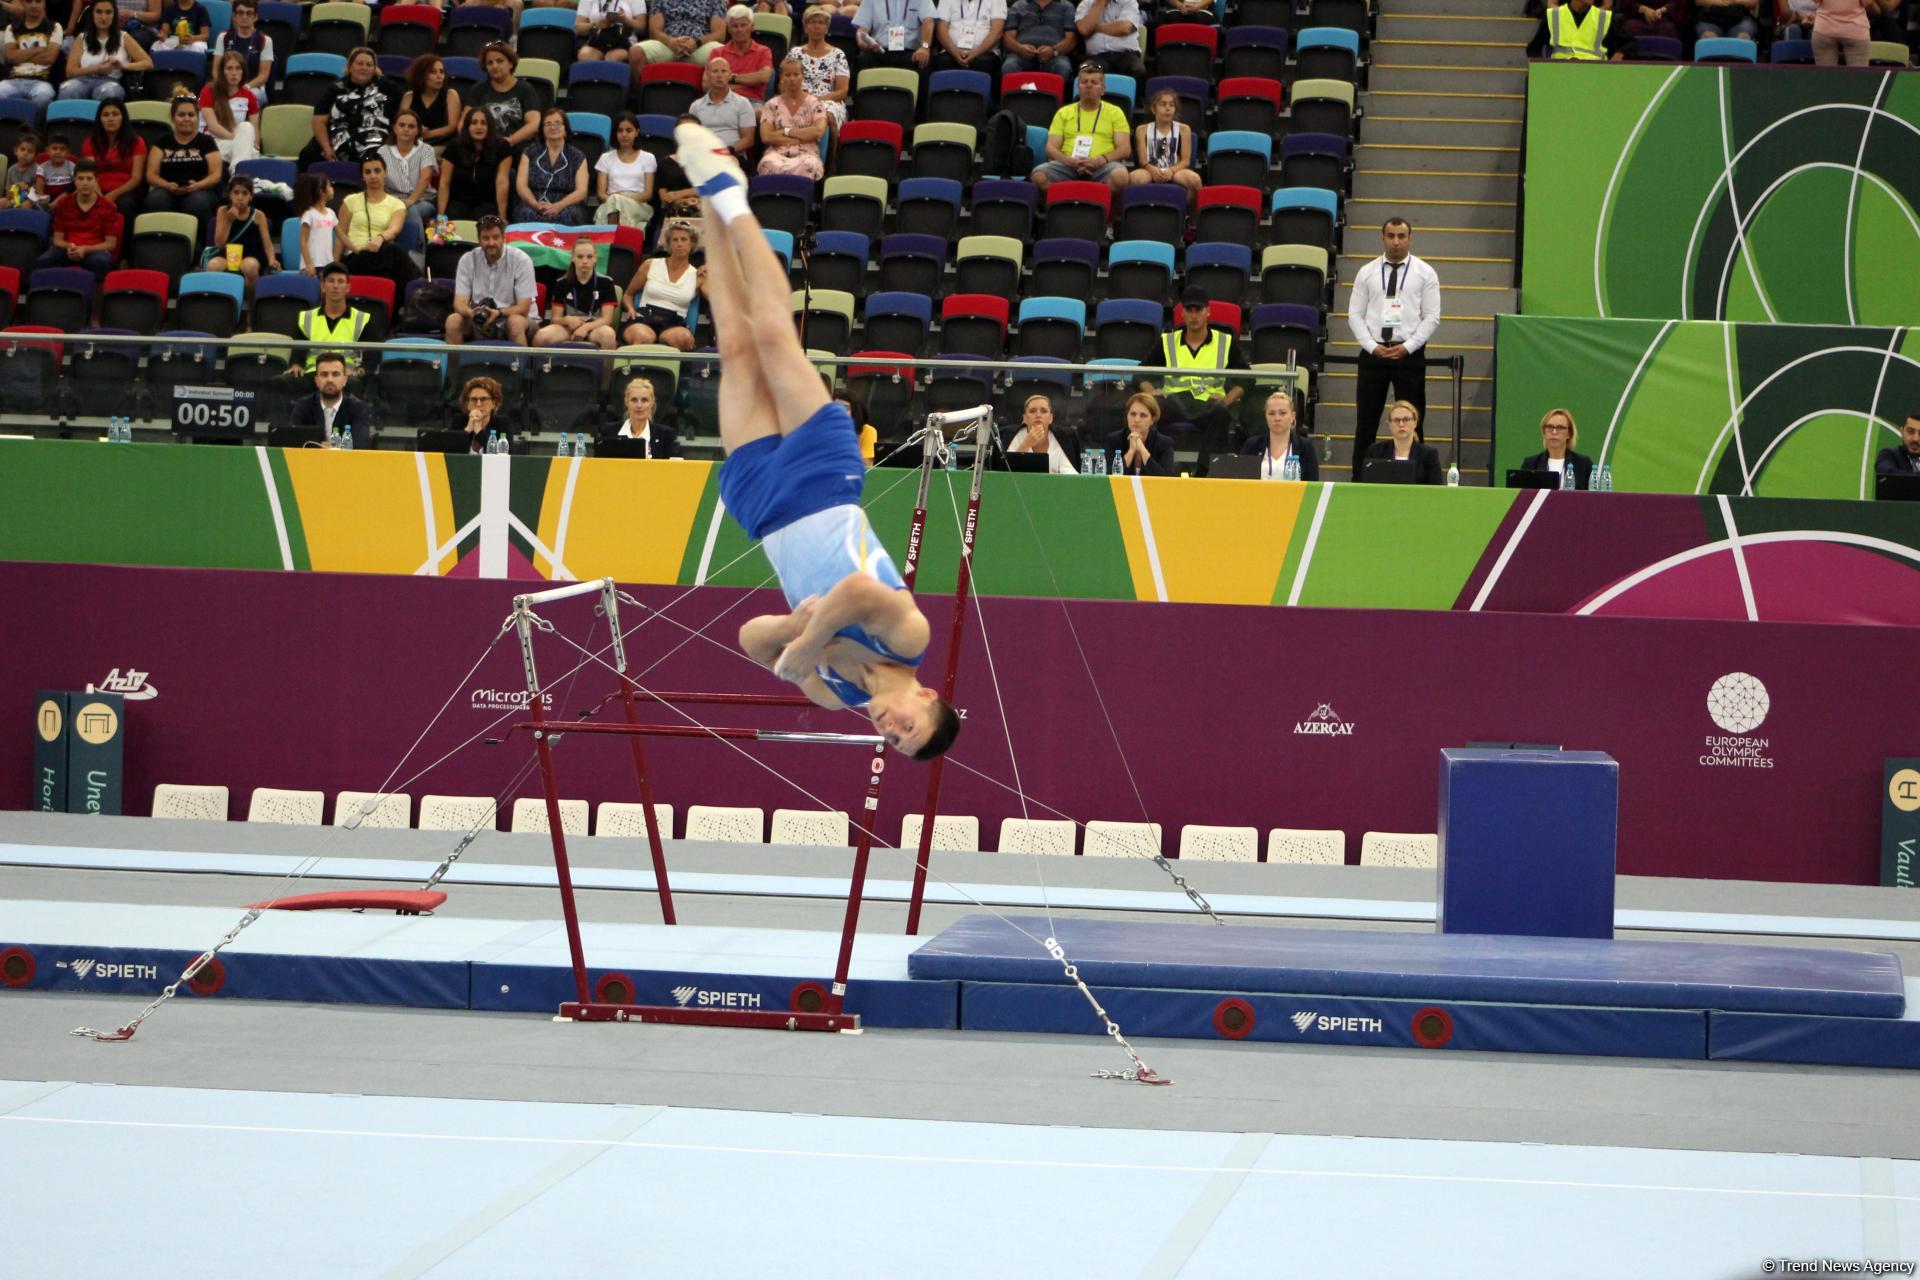 UK gymnast talks on great experience at EYOF Baku 2019